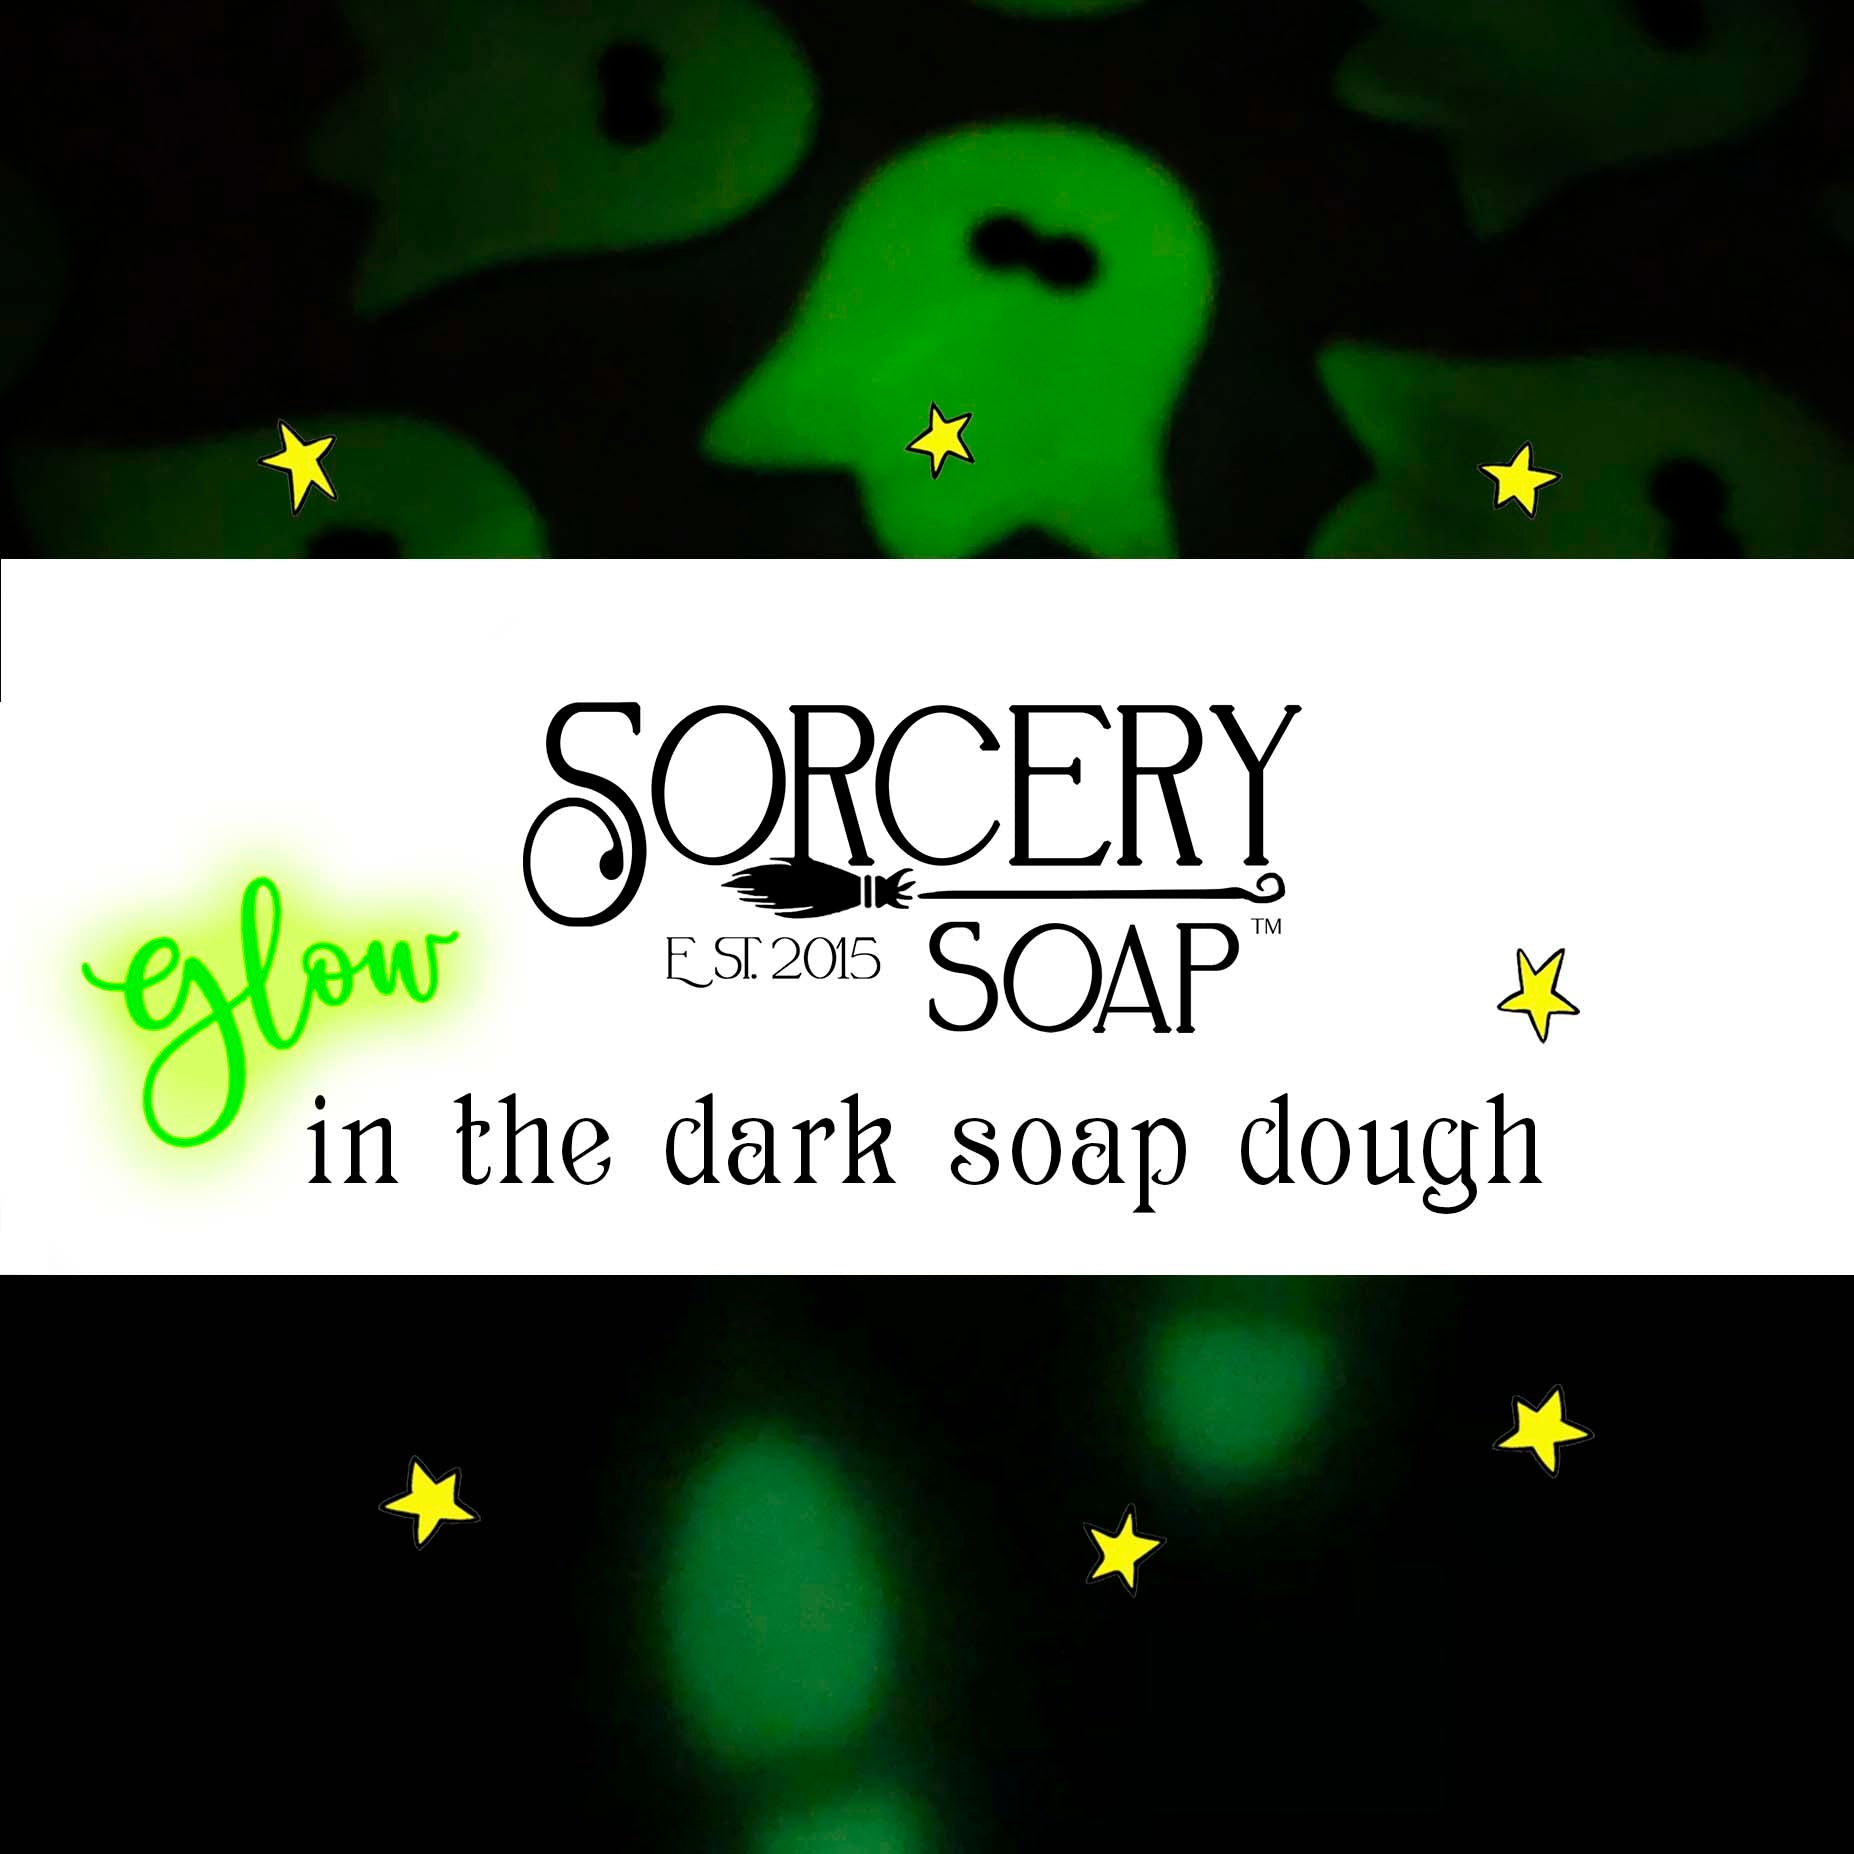 Orange Soap Dough – Sorcery Soaps™